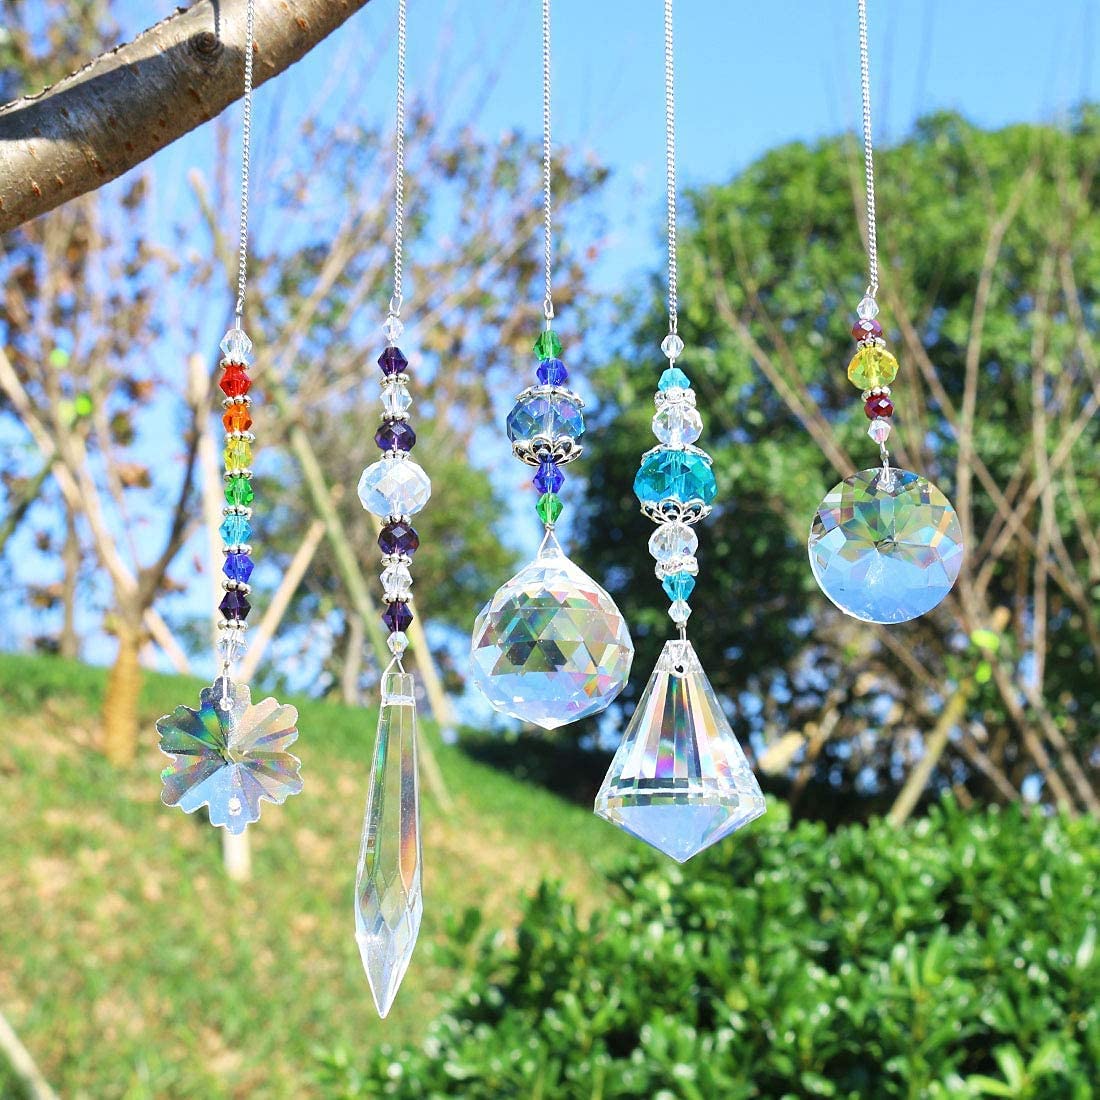 5 pcs Chakra Hanging Chandelier Suncatchers Rainbow Maker Window Sun Catcher Christmas Gift for Her,Kids,Hanging Holiday Decorations